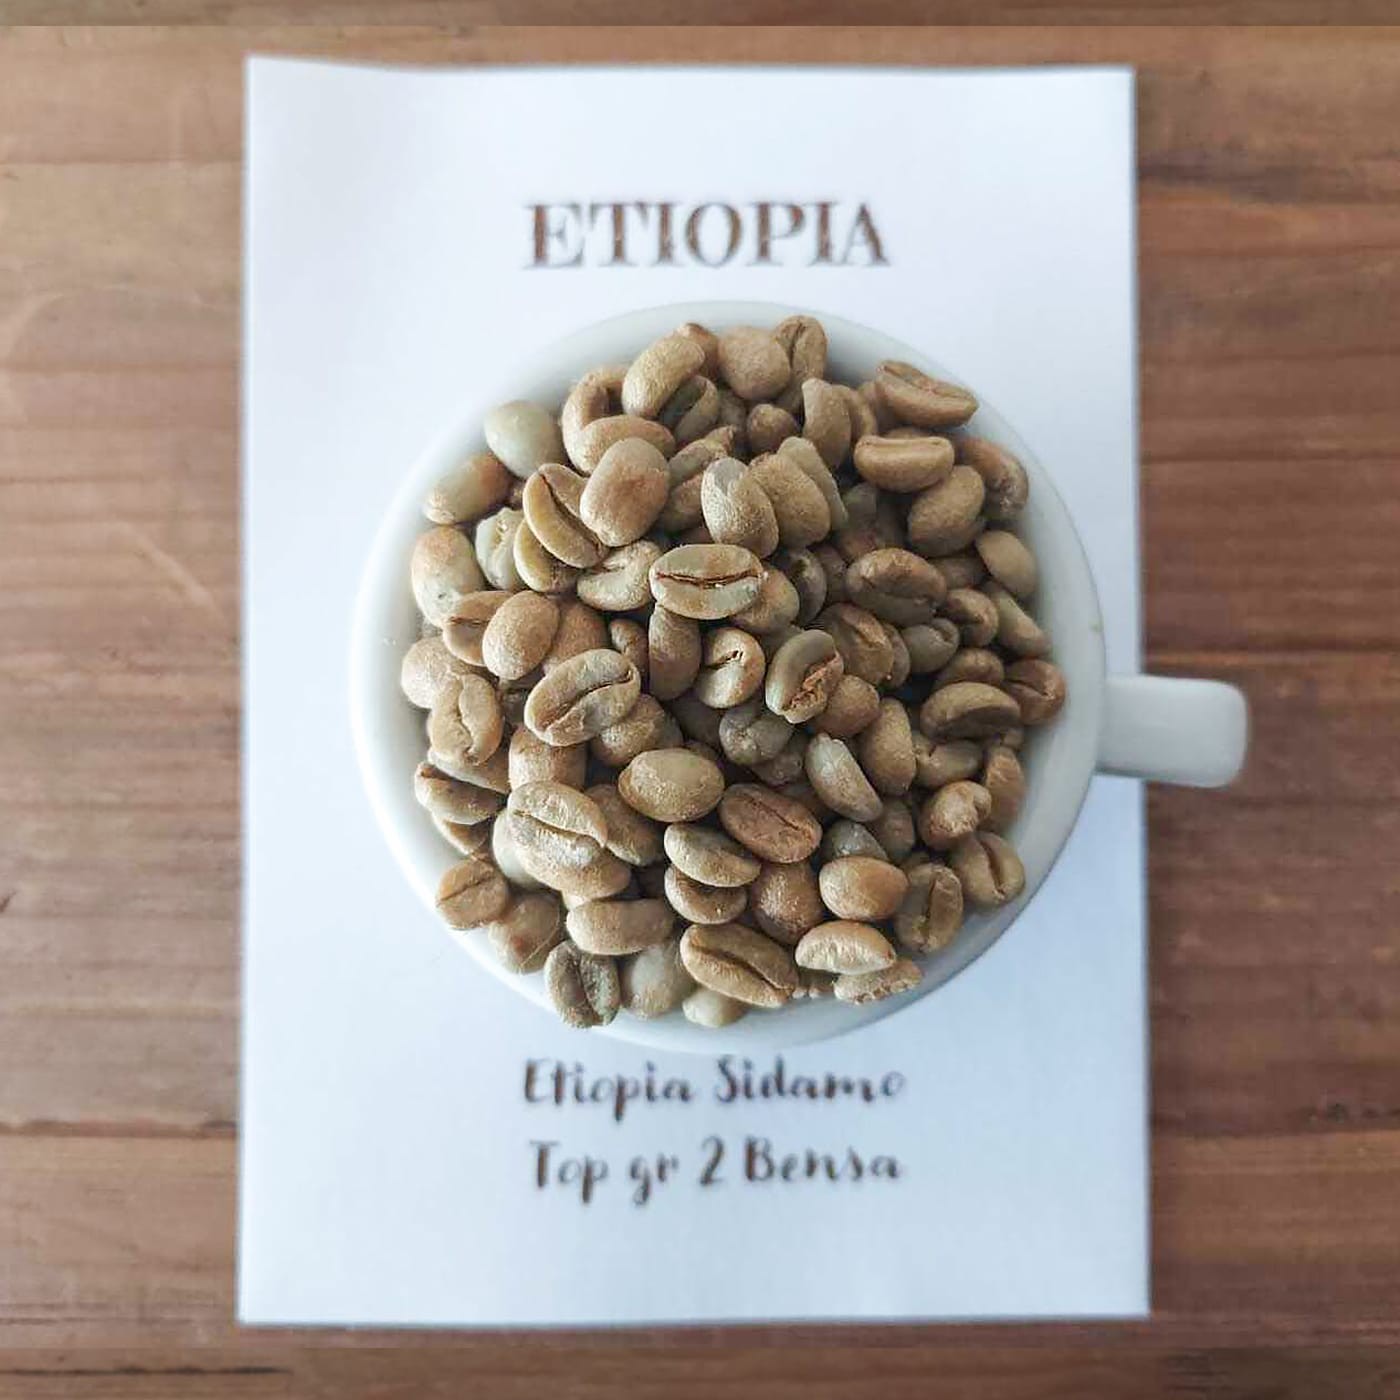 Etiopia Sidamo Caffè Fusari